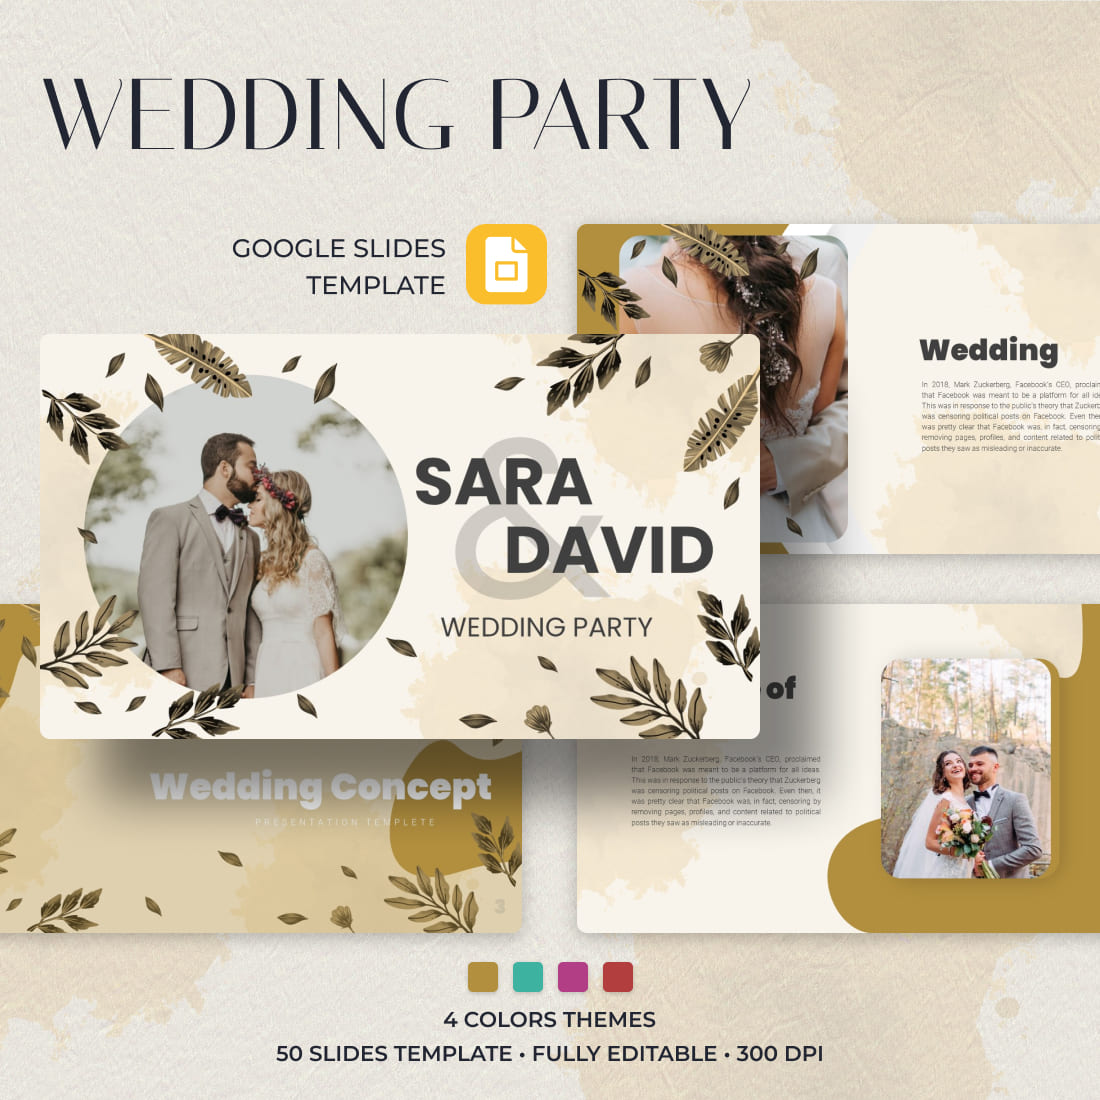 Wedding Party Google Slides Theme.